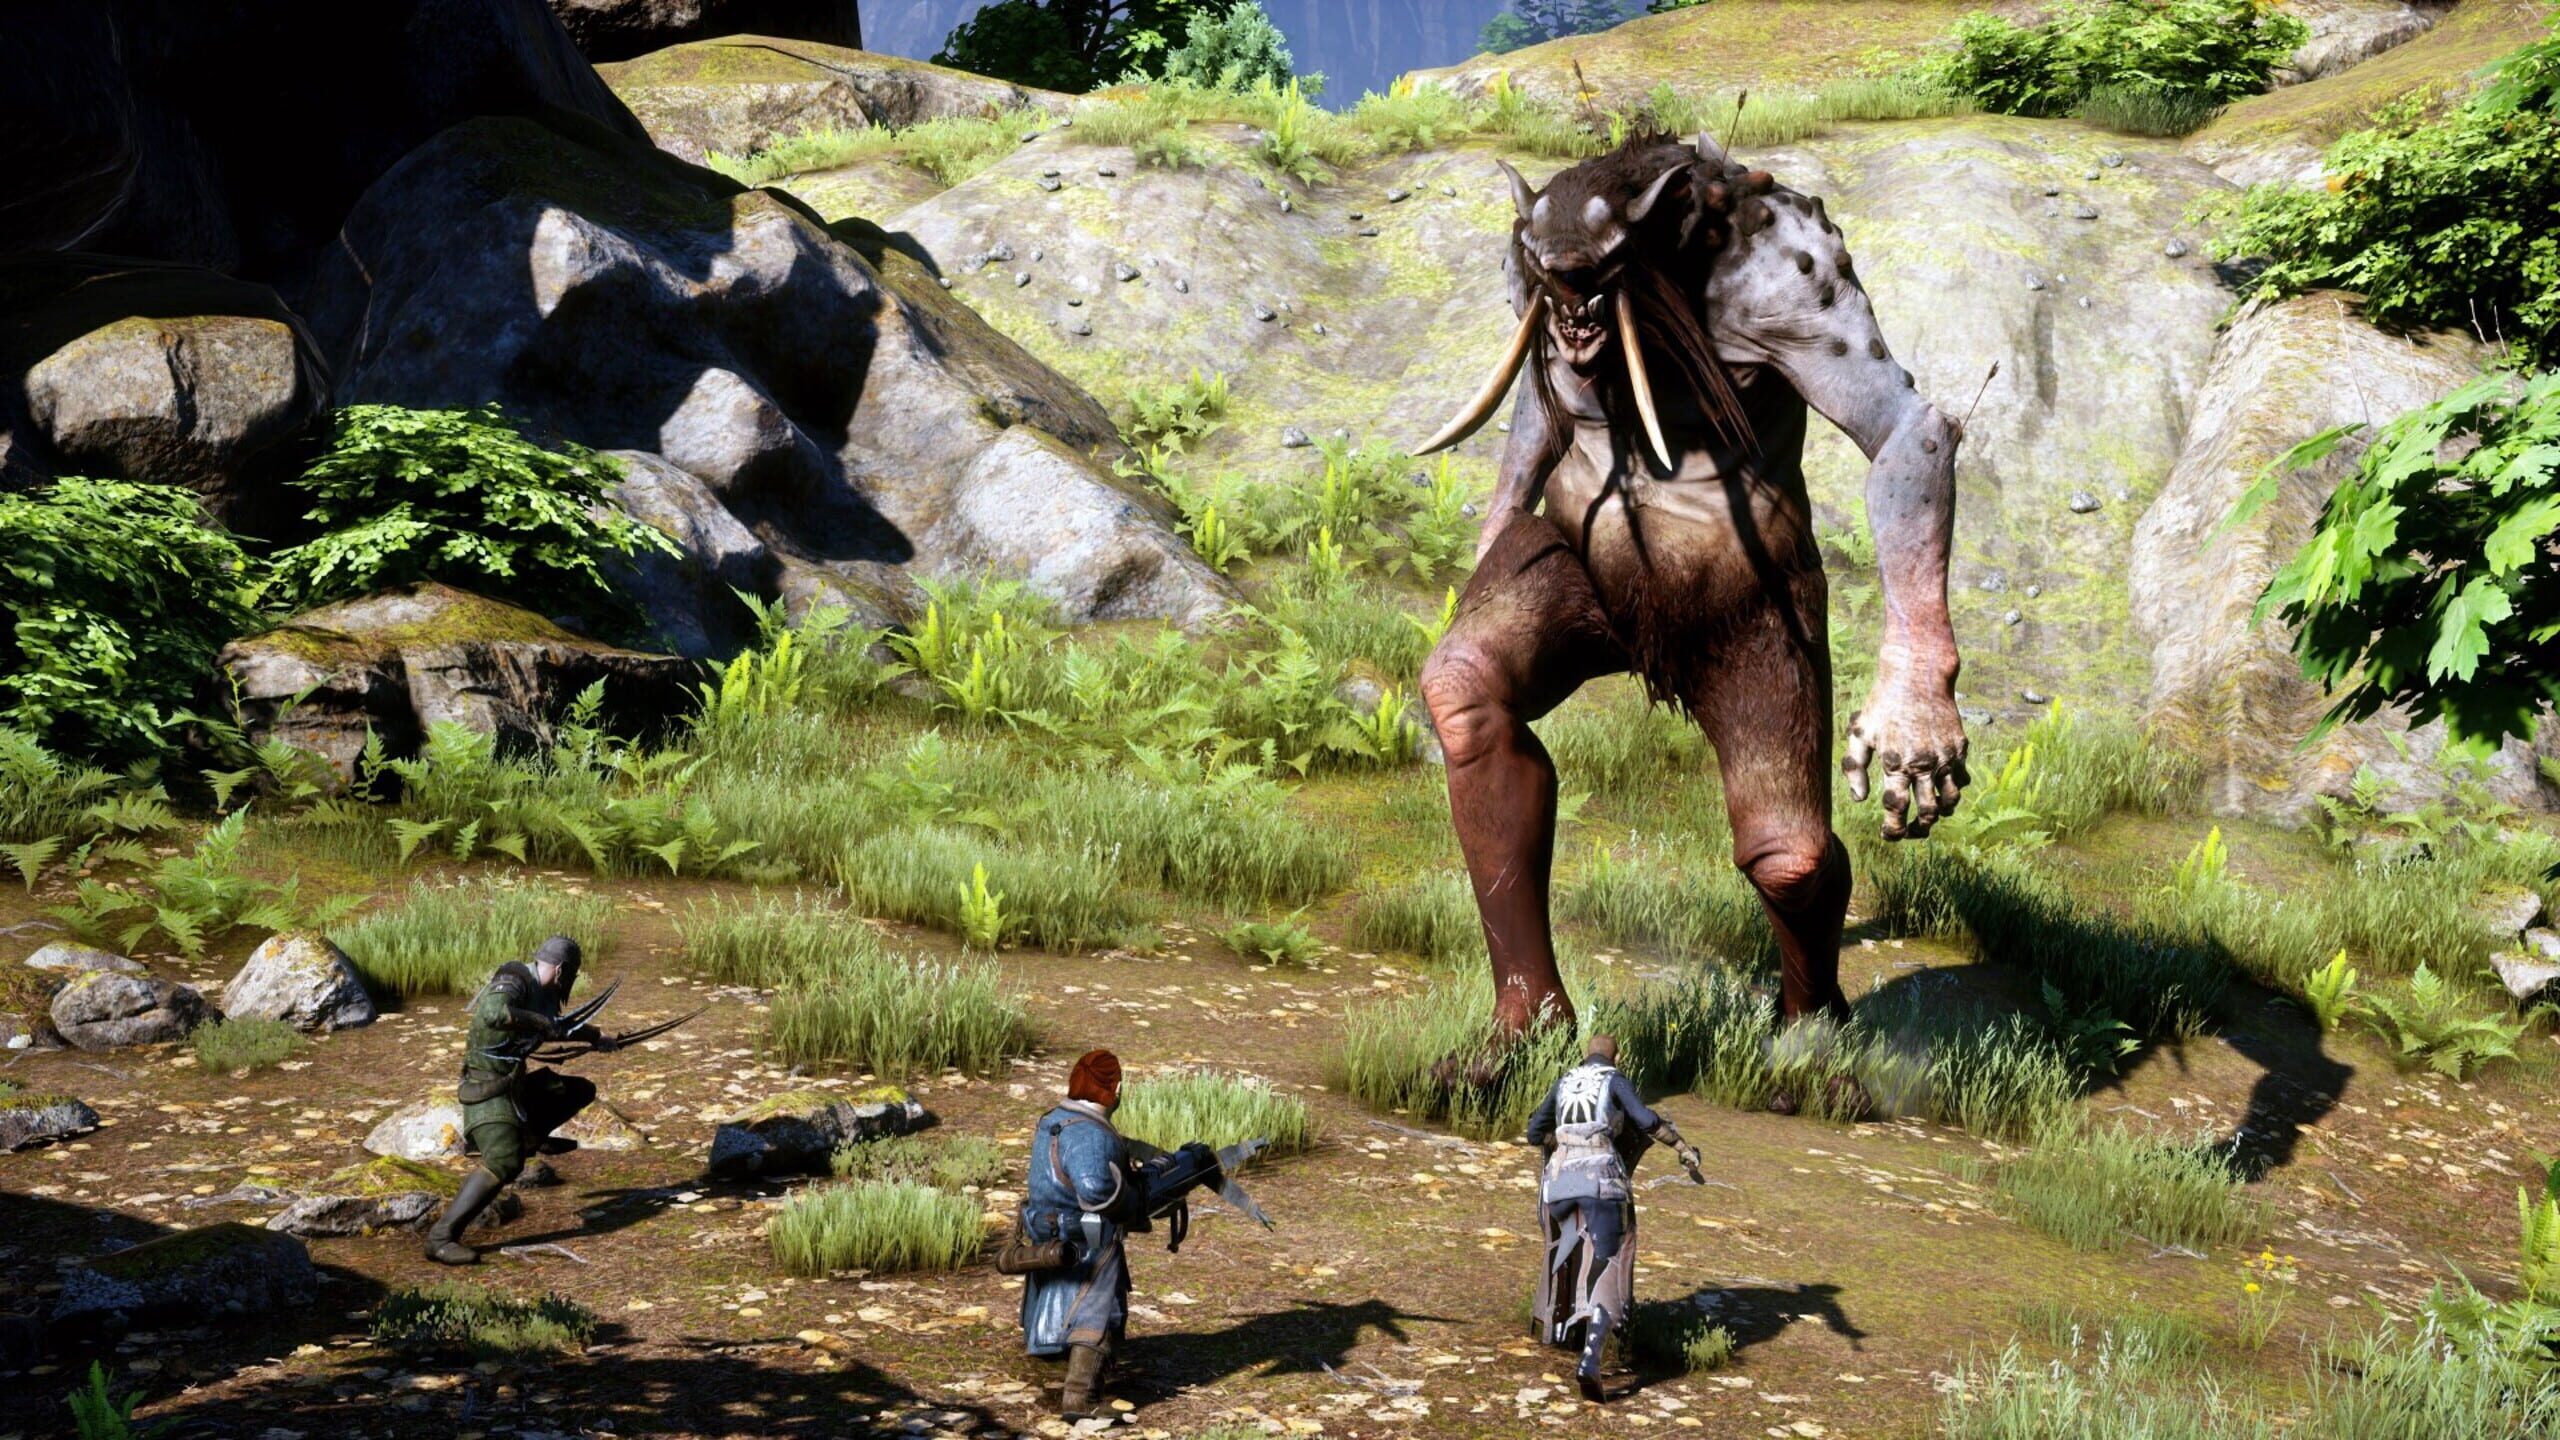 Screenshot do game Dragon Age: Inquisition